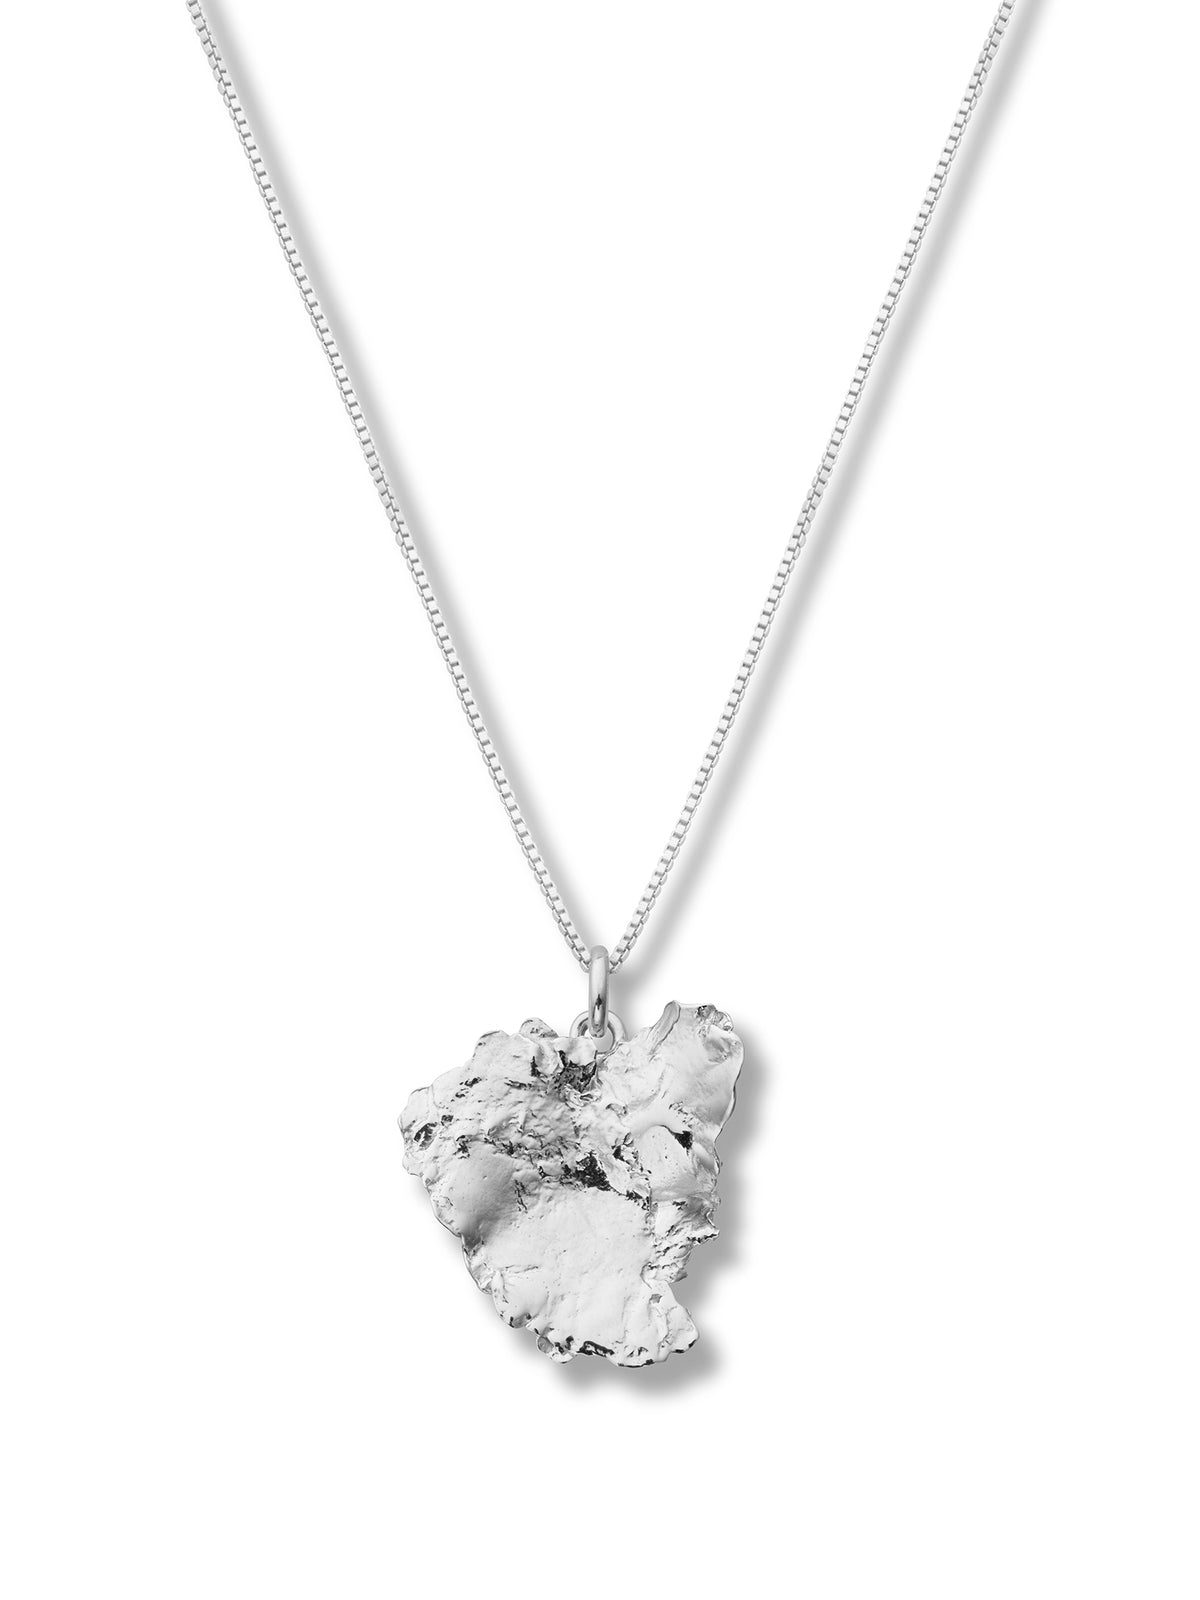 Artemis Small Necklace Silver